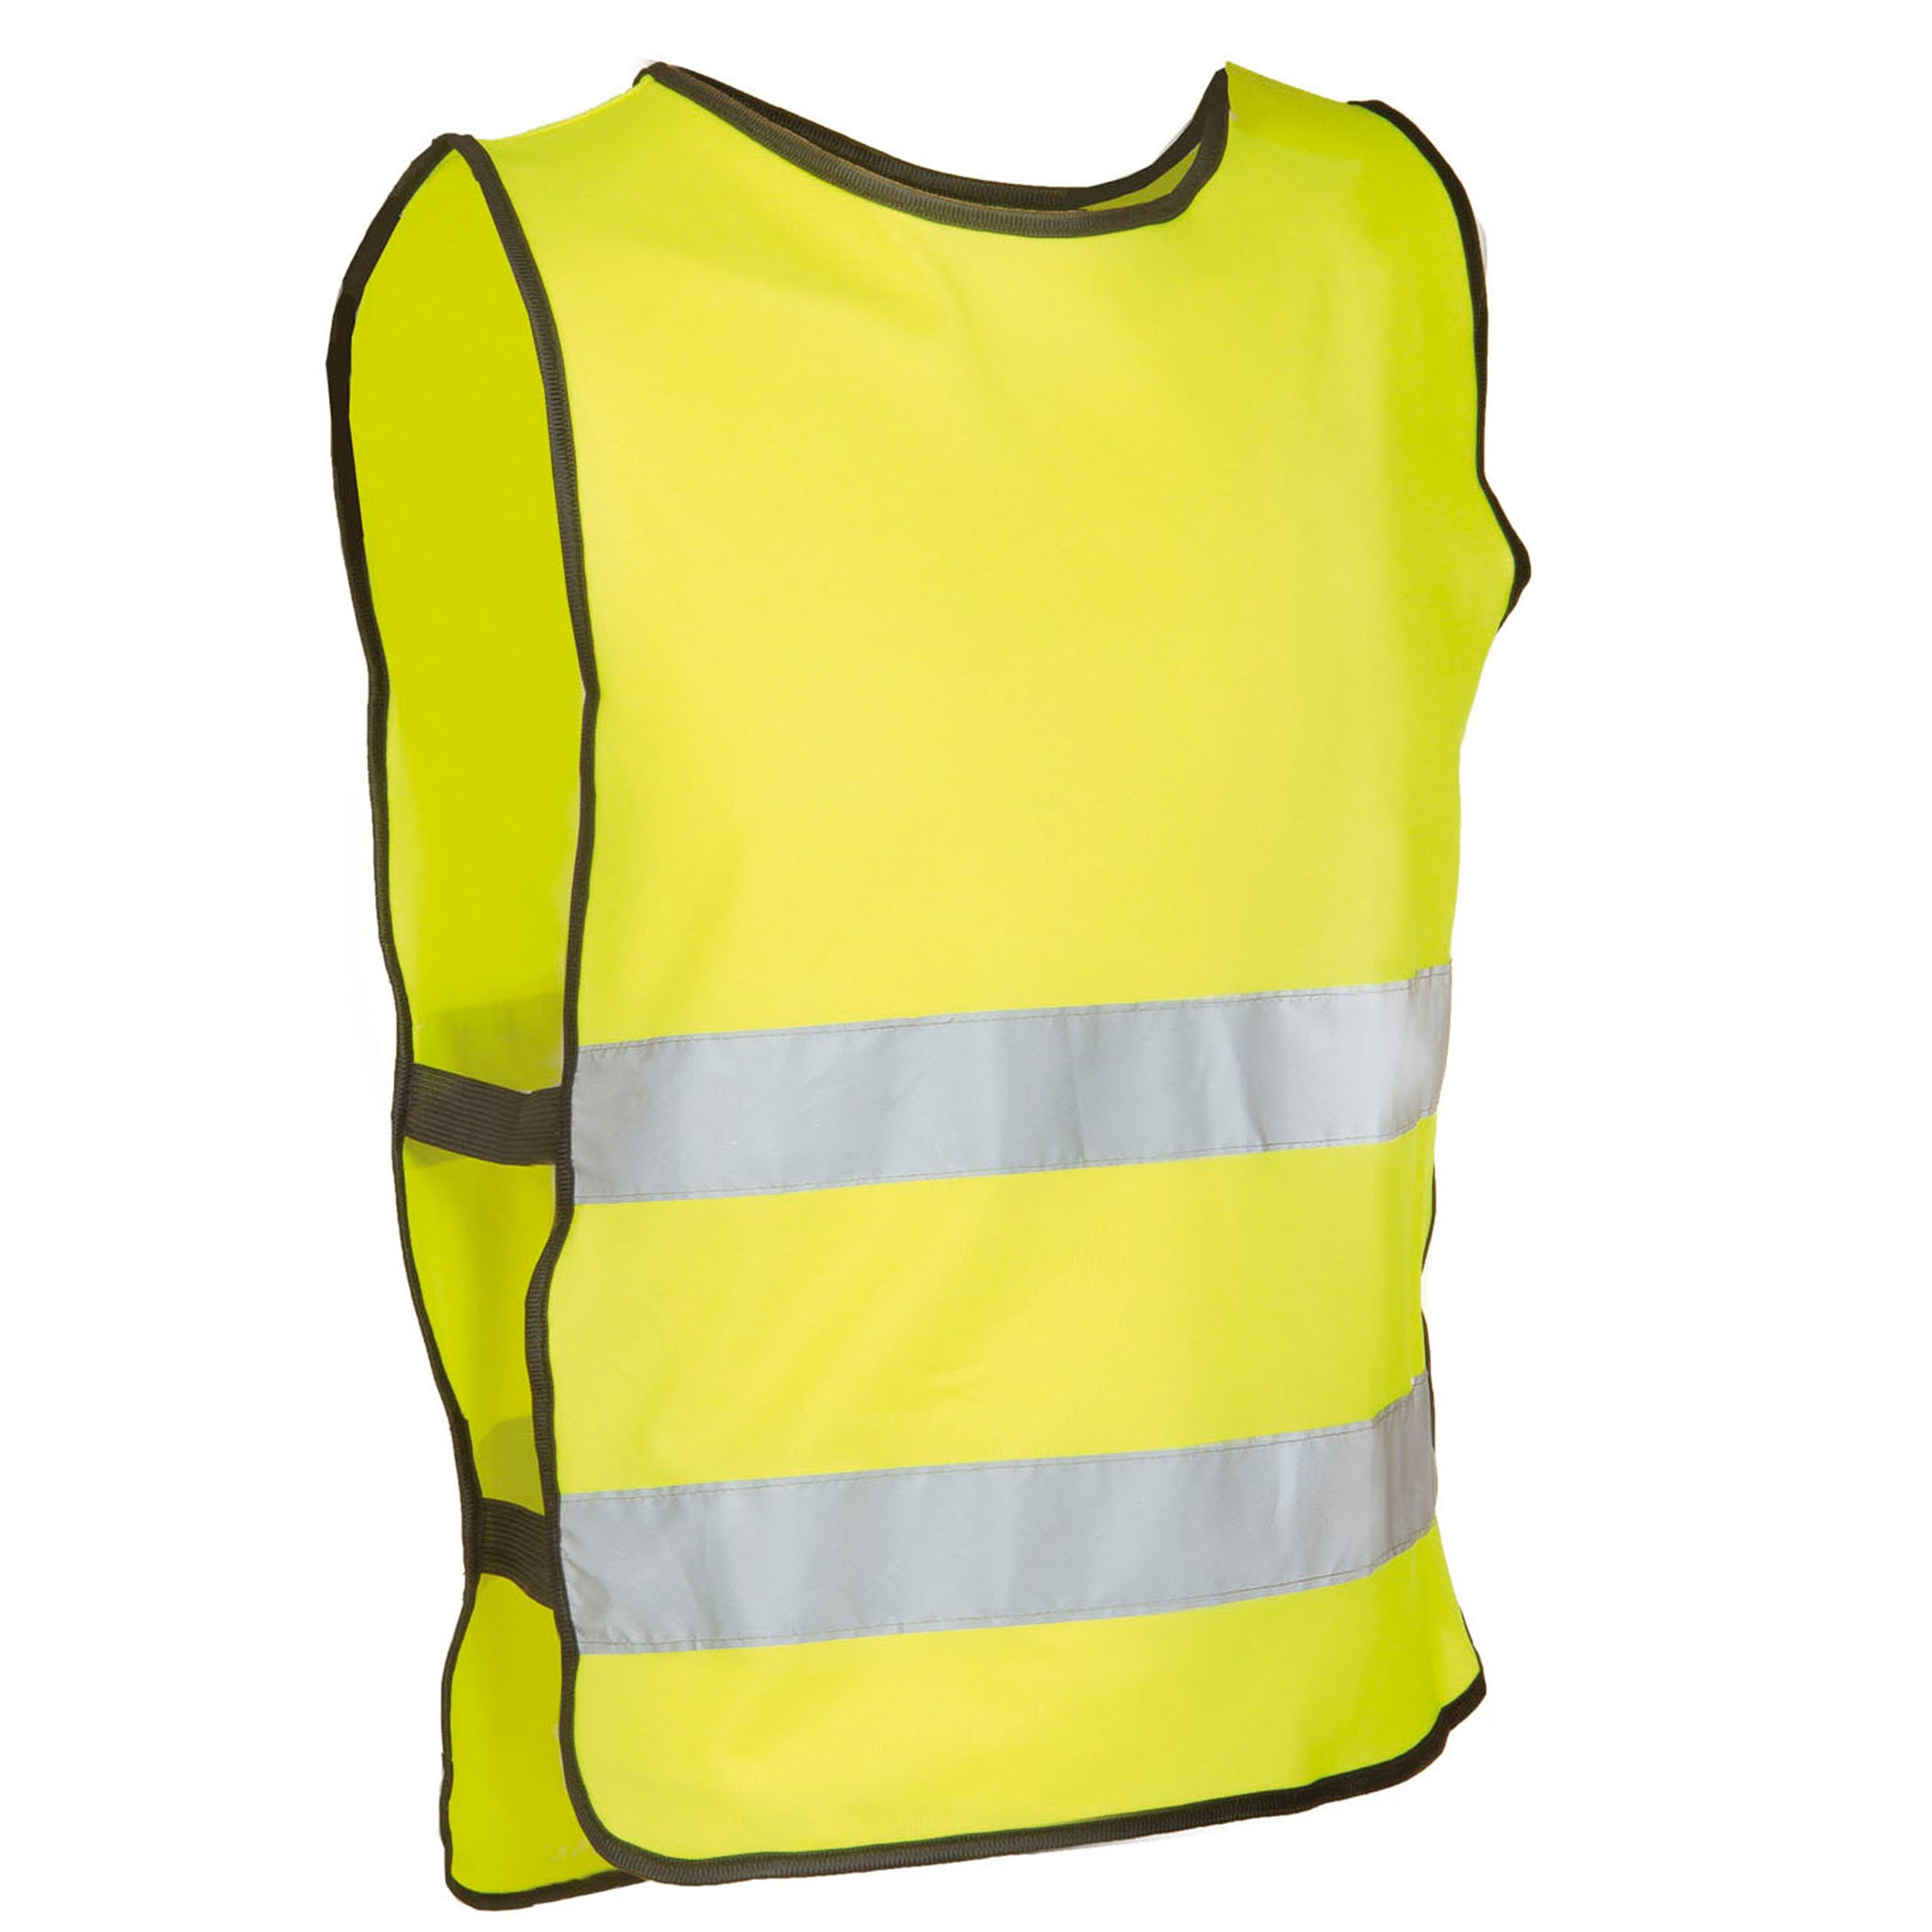 Safety vest / reflex vest